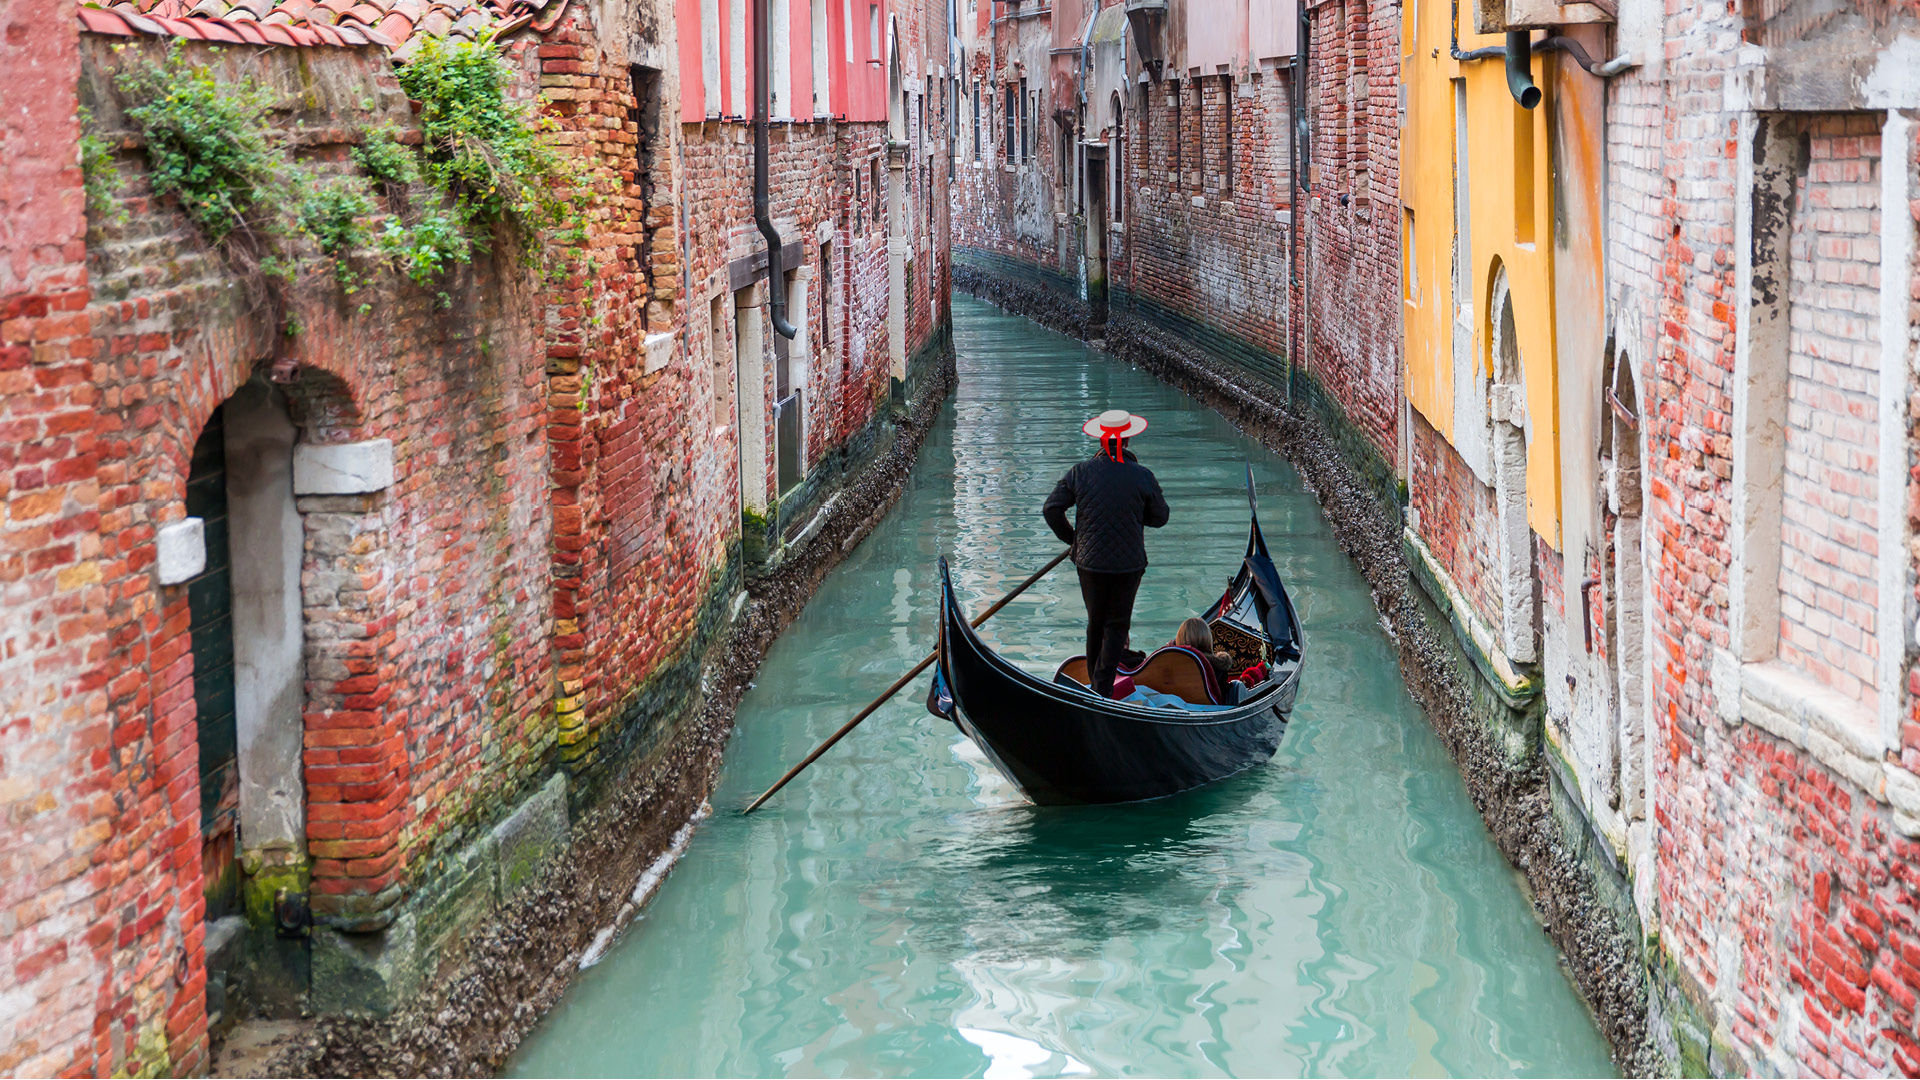 https://images.travelandleisureasia.com/wp-content/uploads/sites/2/2020/04/Feature-image-Venetian-Gondoliers.jpg